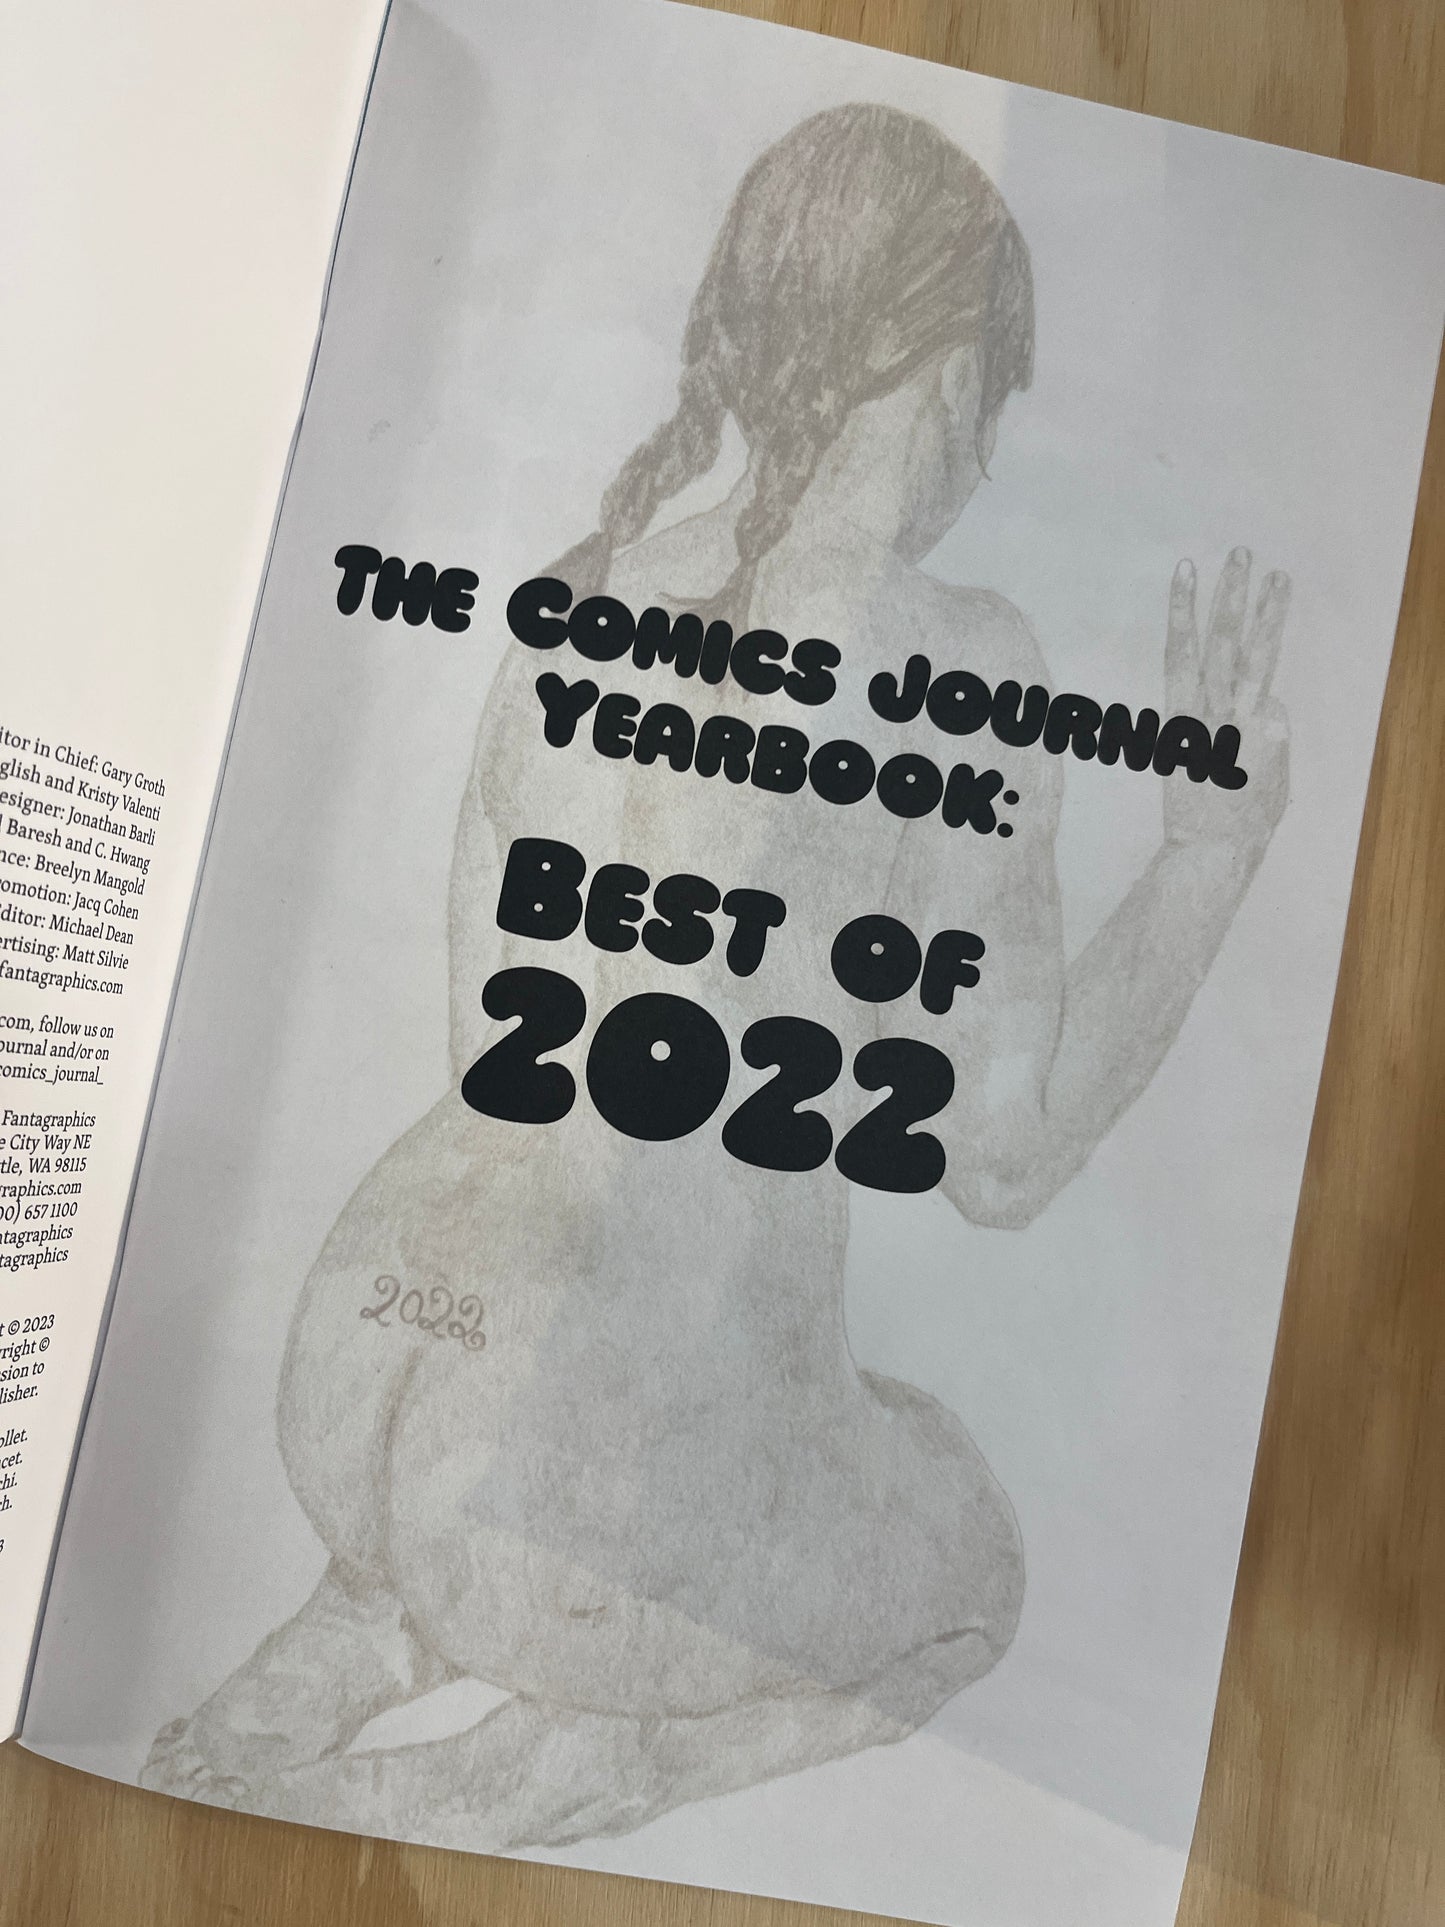 The Comics Journal Yearbook: Best of 2022